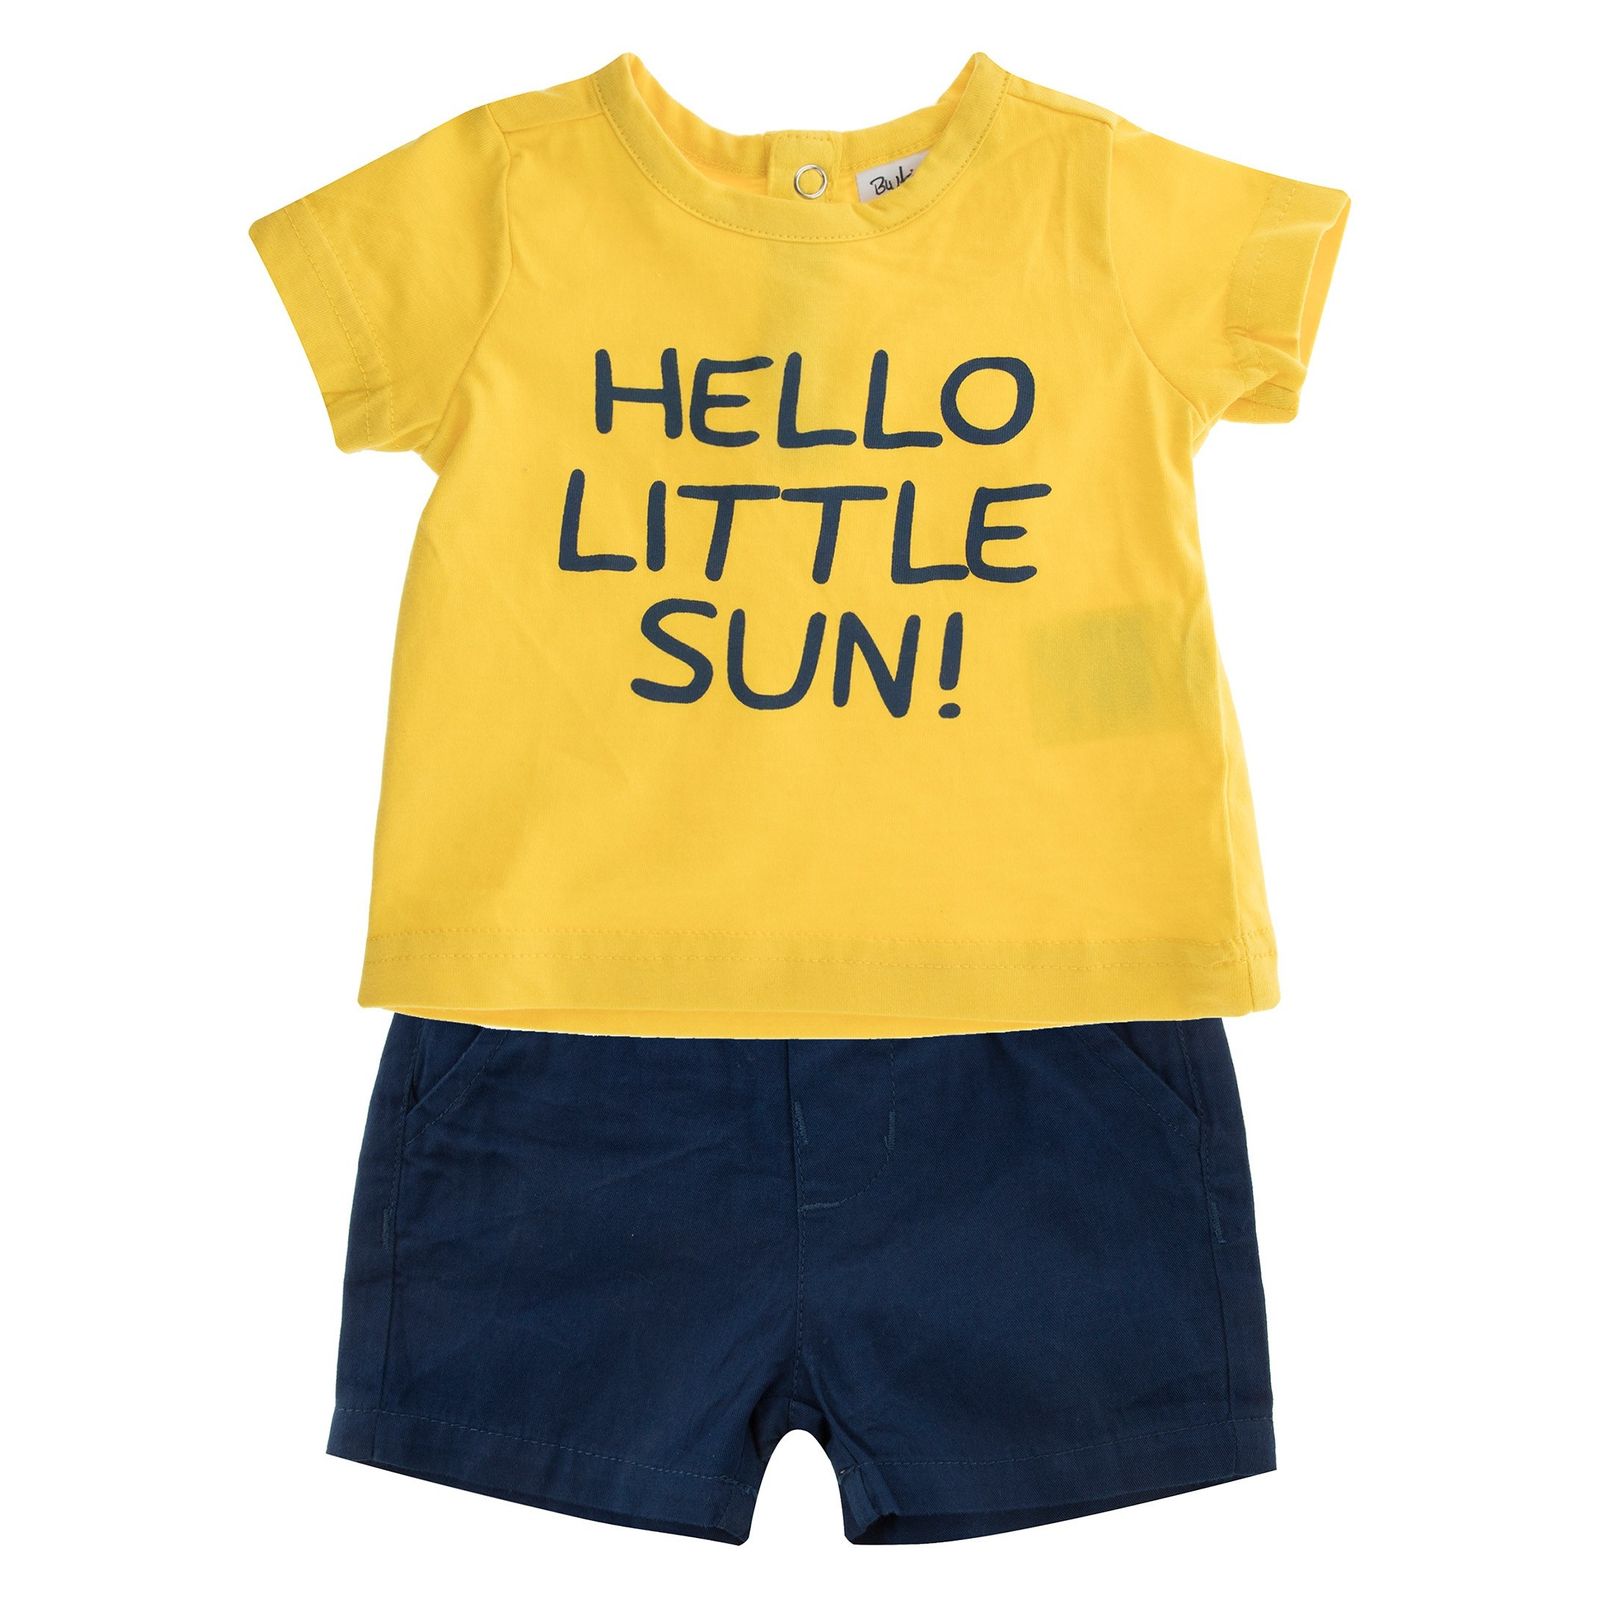 تی شرت و شلوارک نخی نوزادی پسرانه - بلوکیدز - زرد و سرمه اي - 2